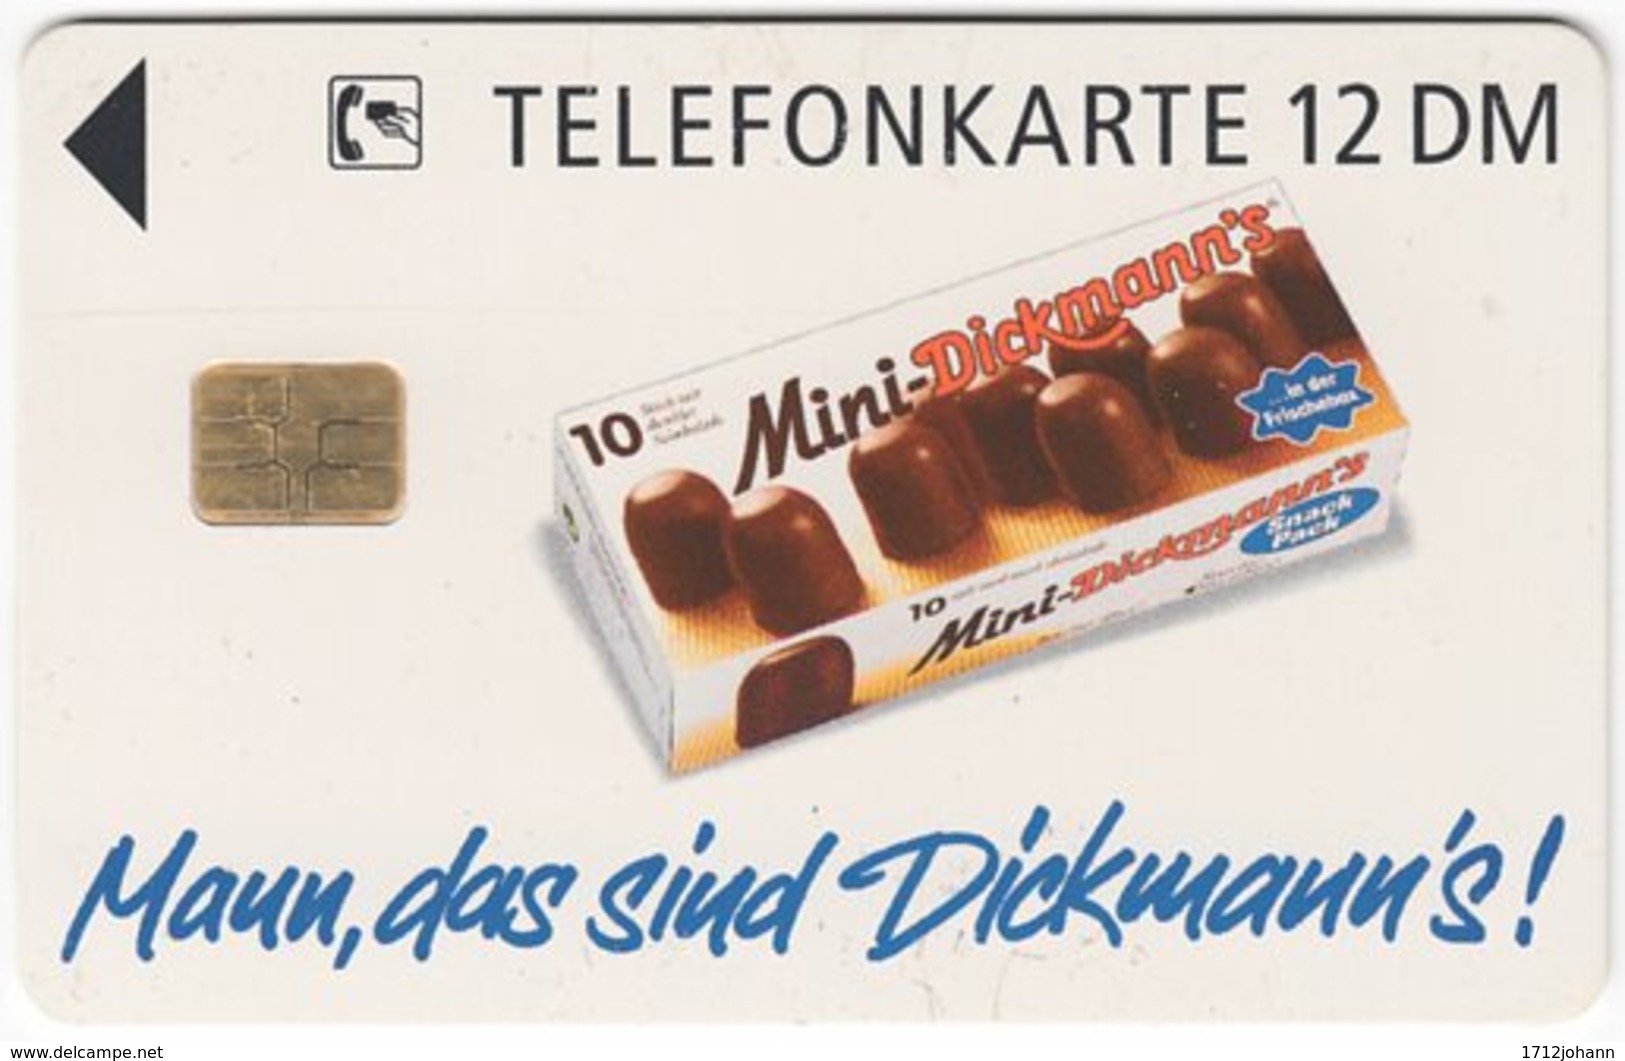 GERMANY O-Serie B-396 - 1234 08.95 - Comics, Advertising, Food, Sweets - MINT - O-Series: Kundenserie Vom Sammlerservice Ausgeschlossen